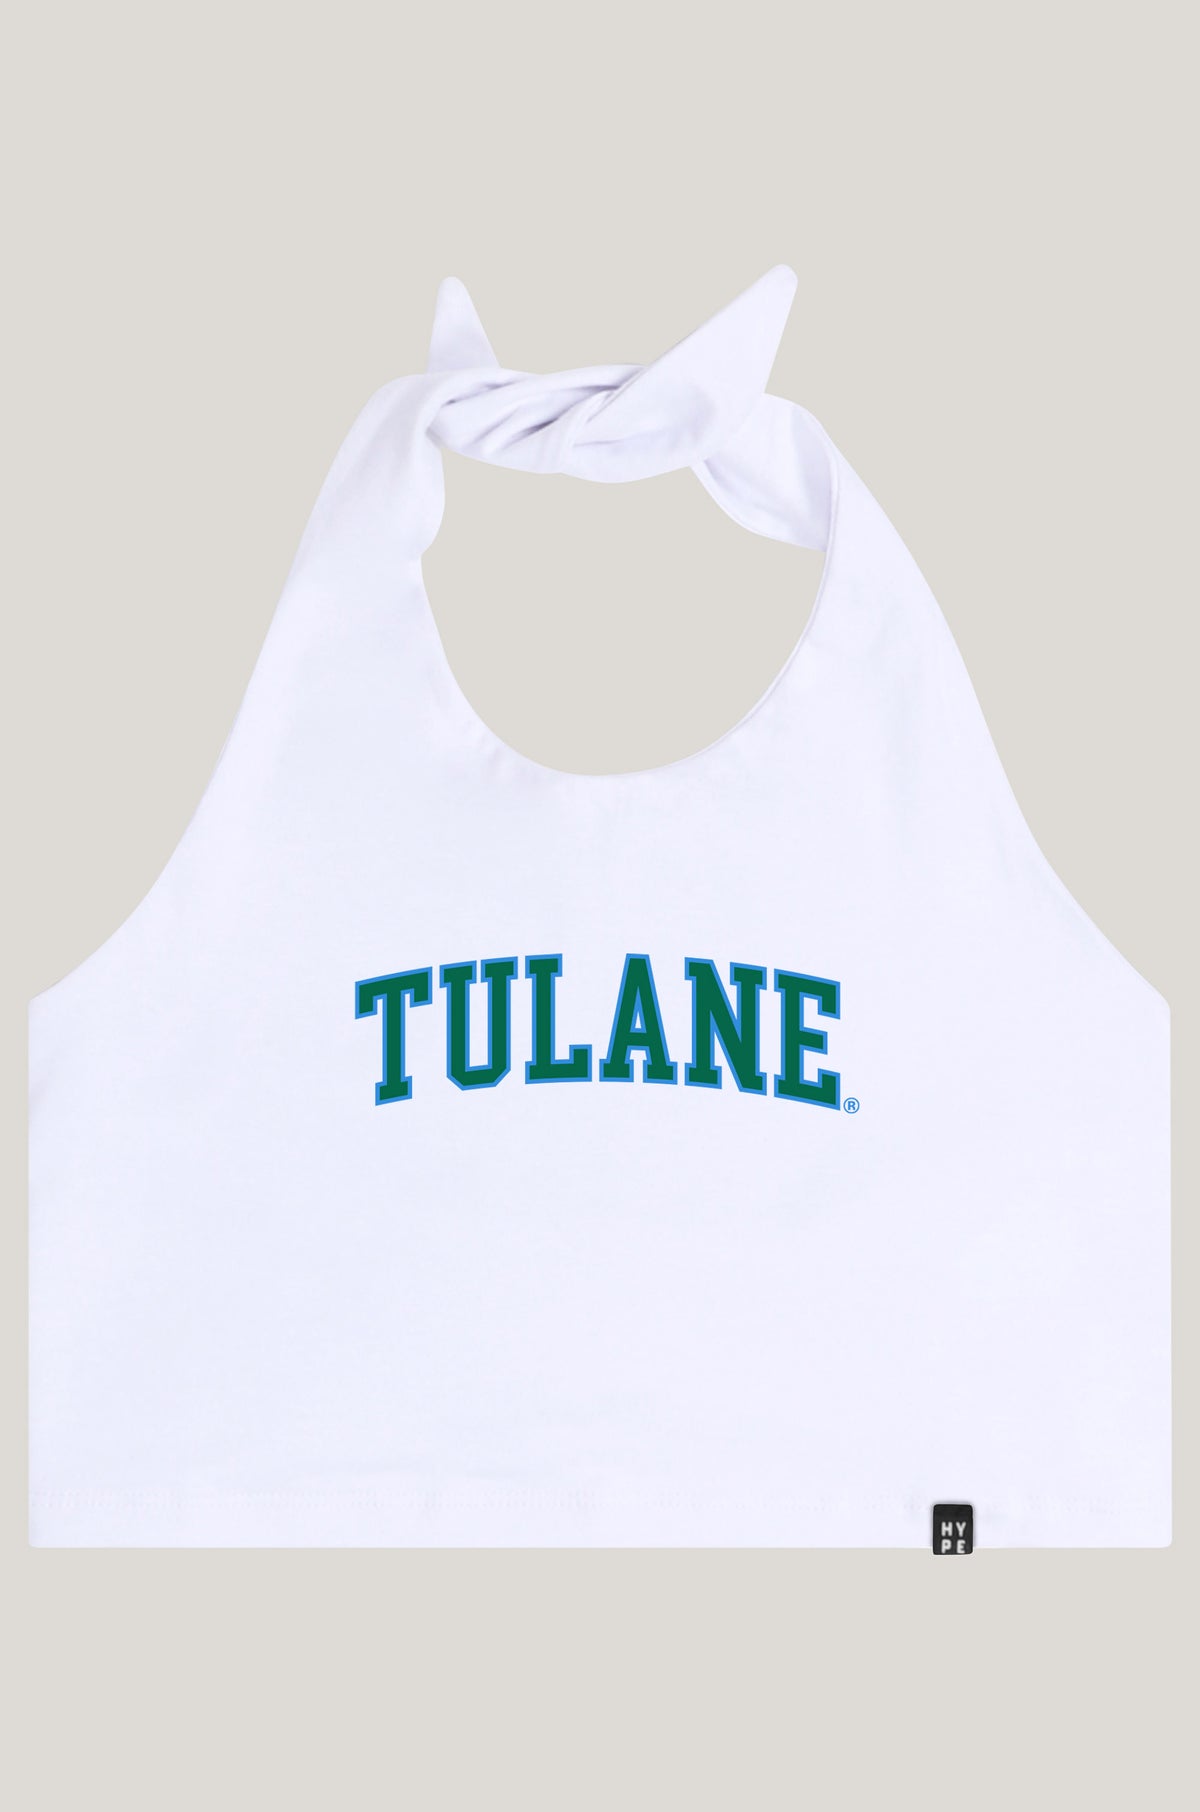 Tulane Tailgate Top